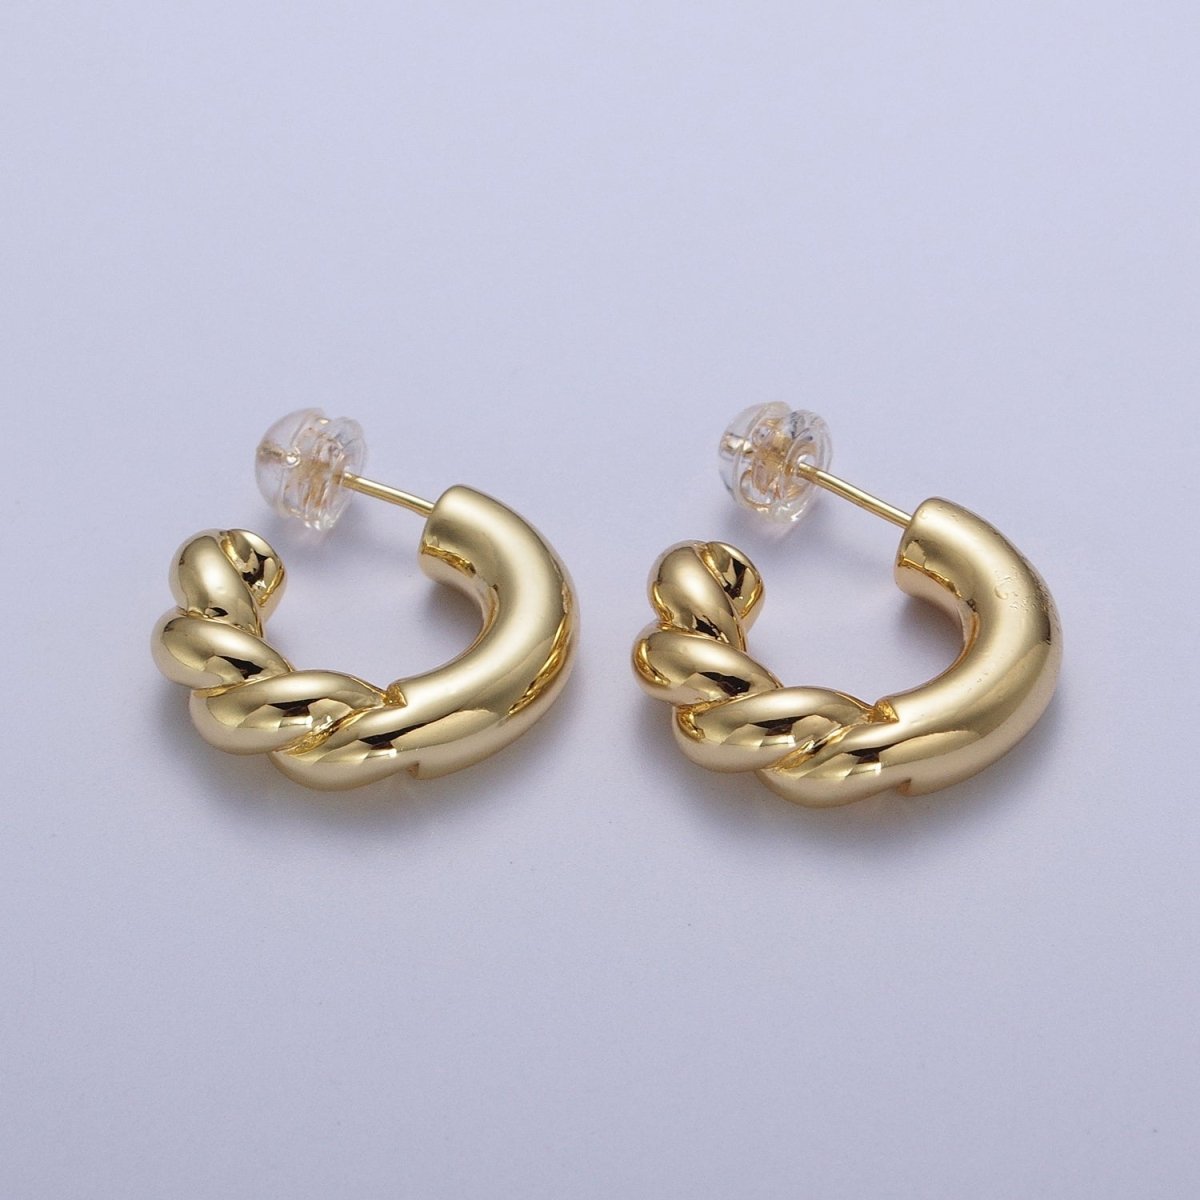 Gold Filled Half Twist Croissant Gold / Silver 20mm C Shaped Hoops Stud Earrings | Y-108 Y-109 - DLUXCA